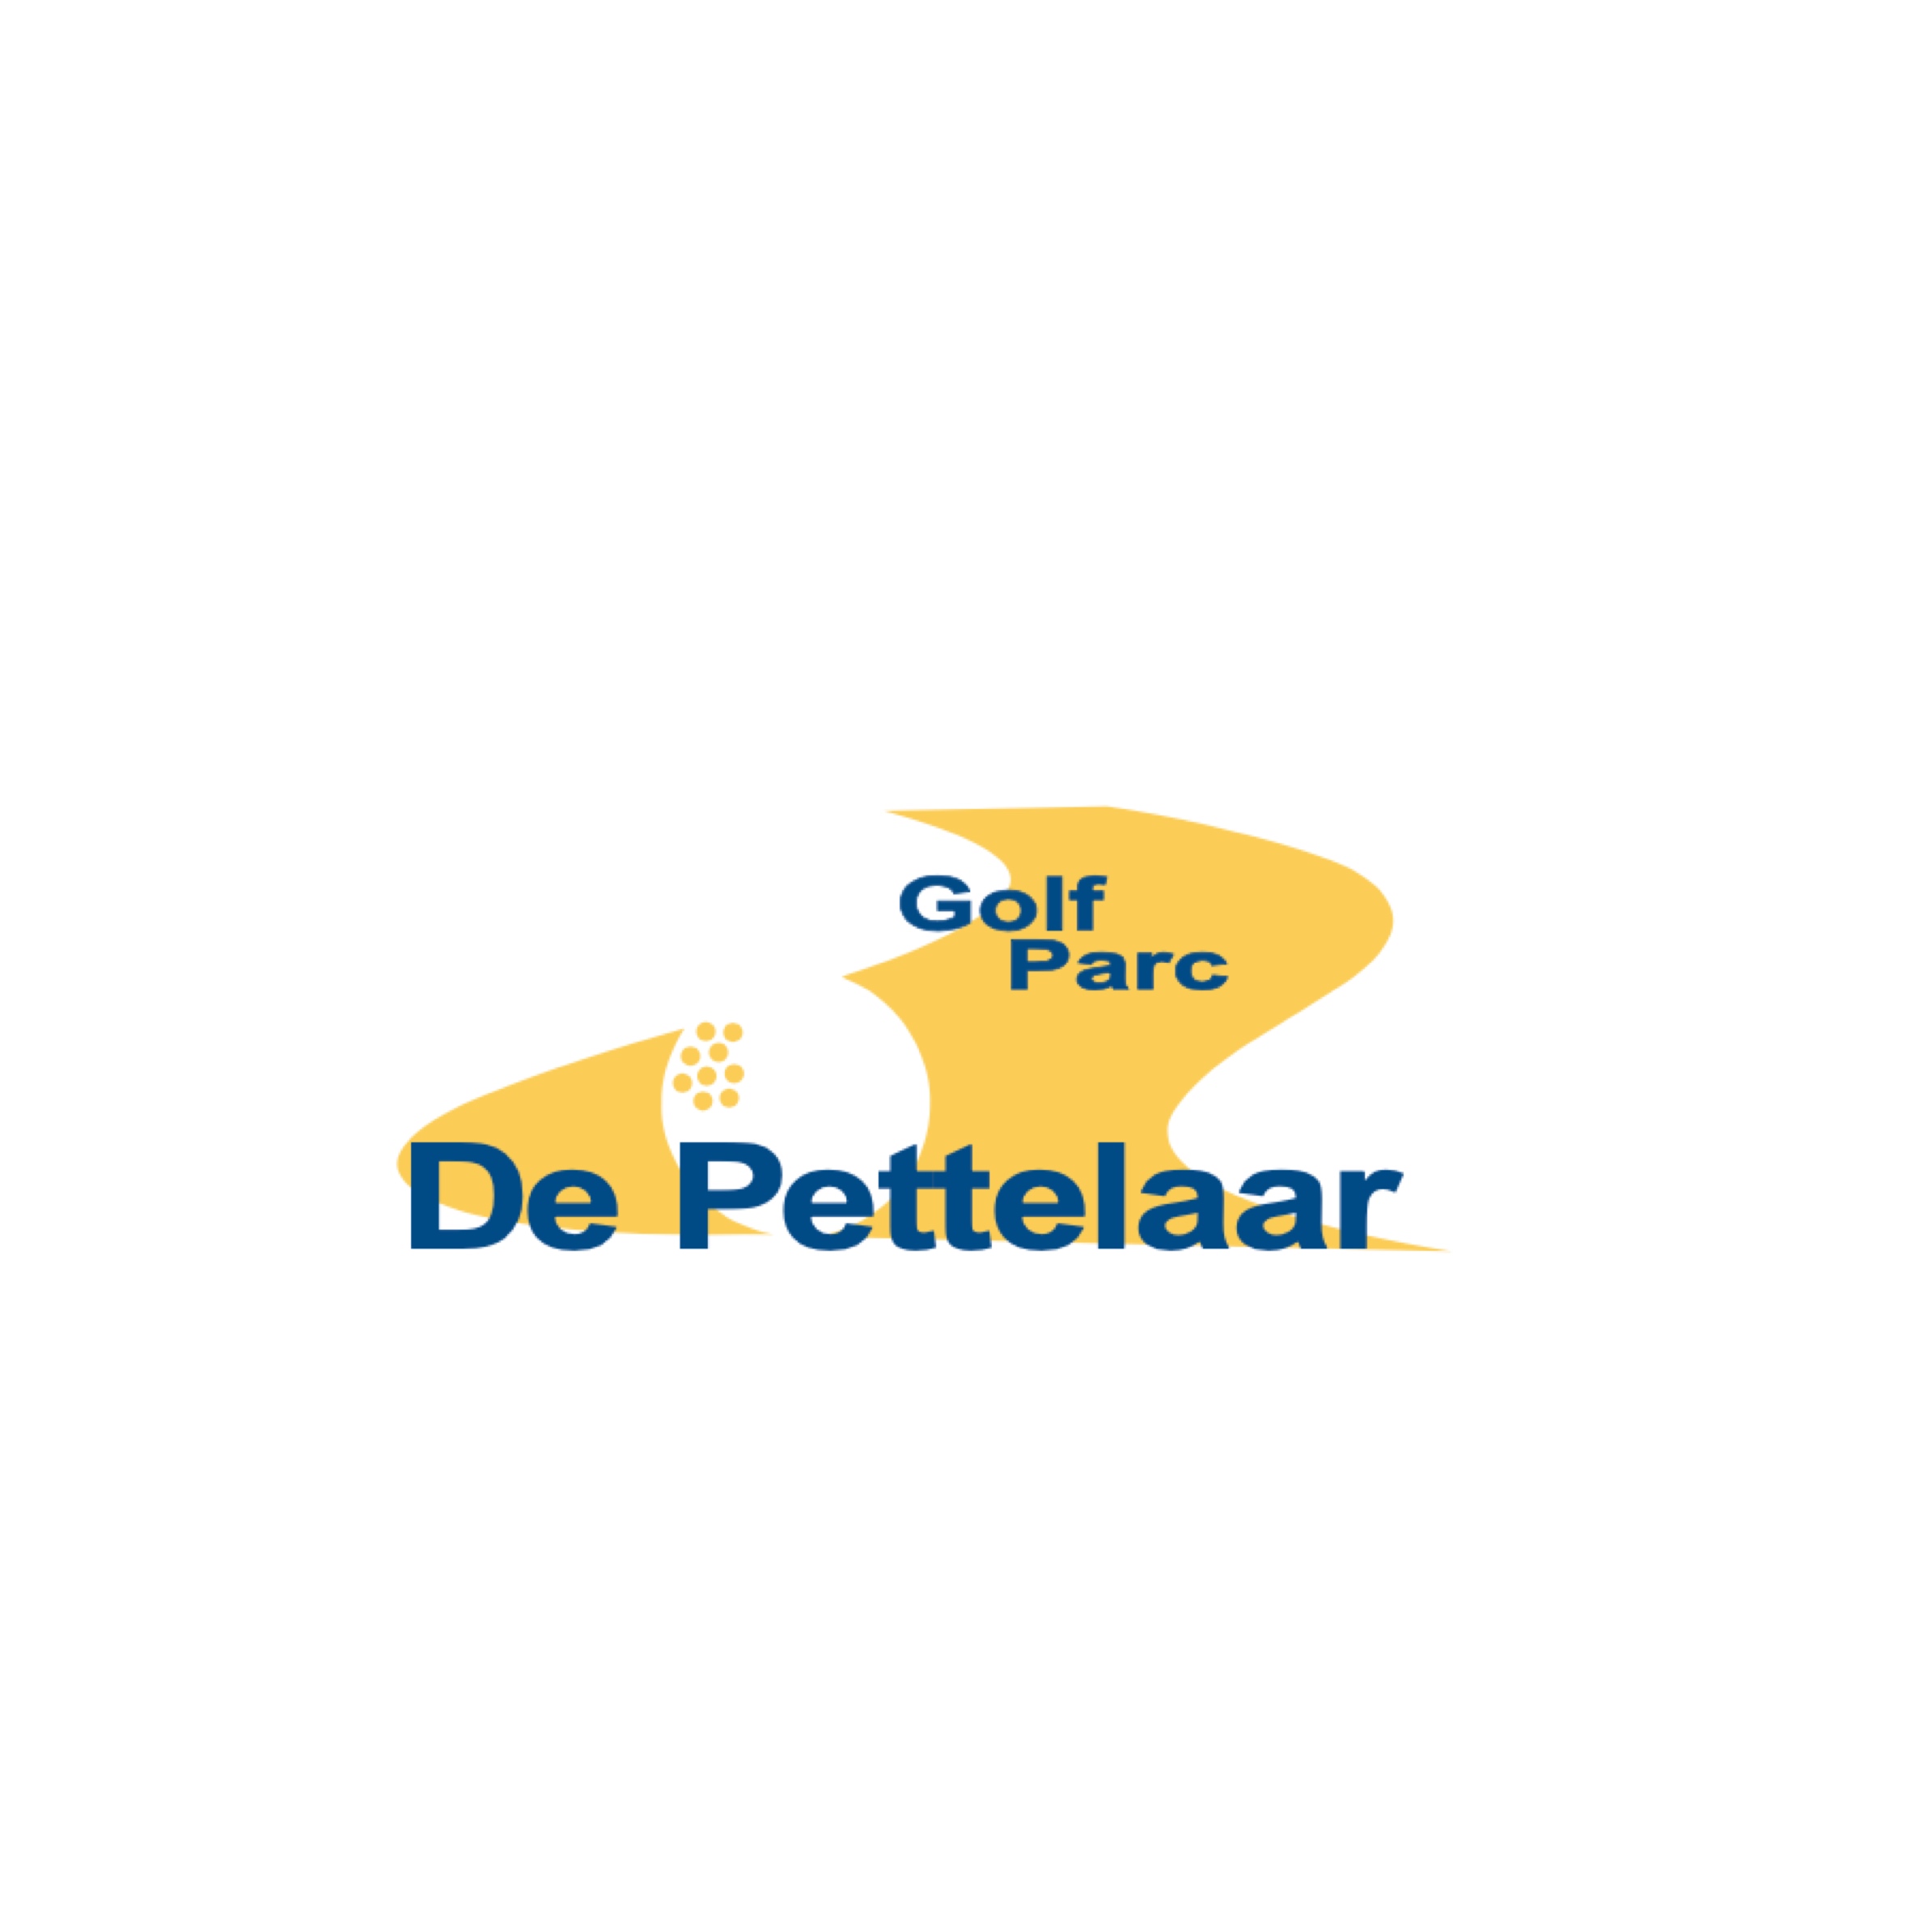 46. Petterlaar/NL (De Petterlaar) 9-Loch-Platz NEU